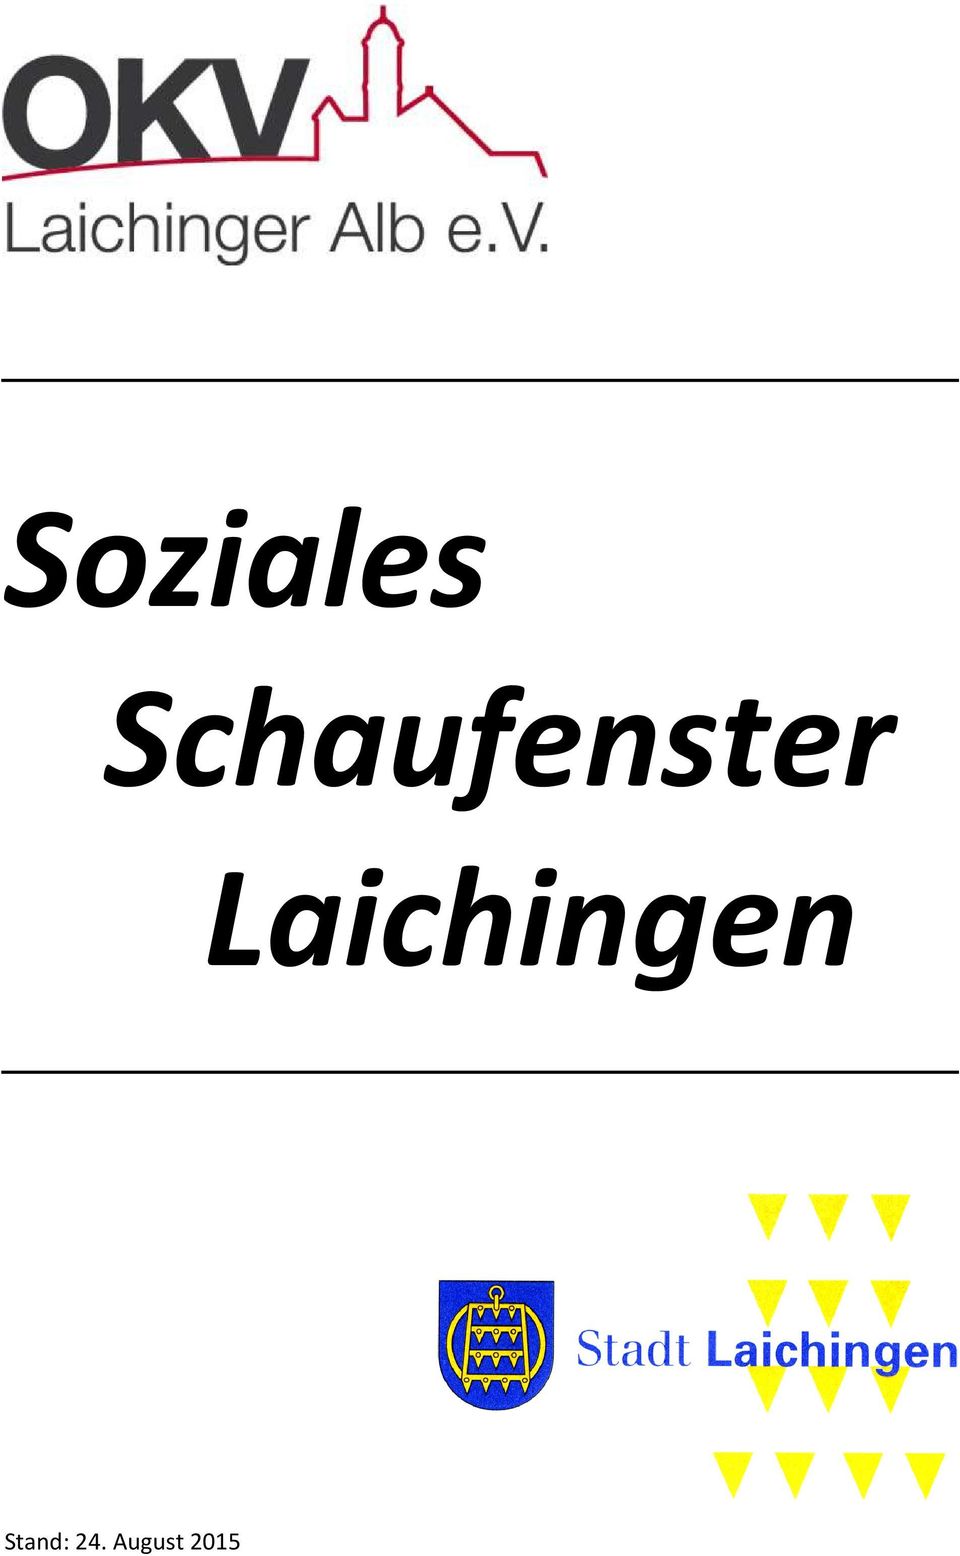 Laichingen